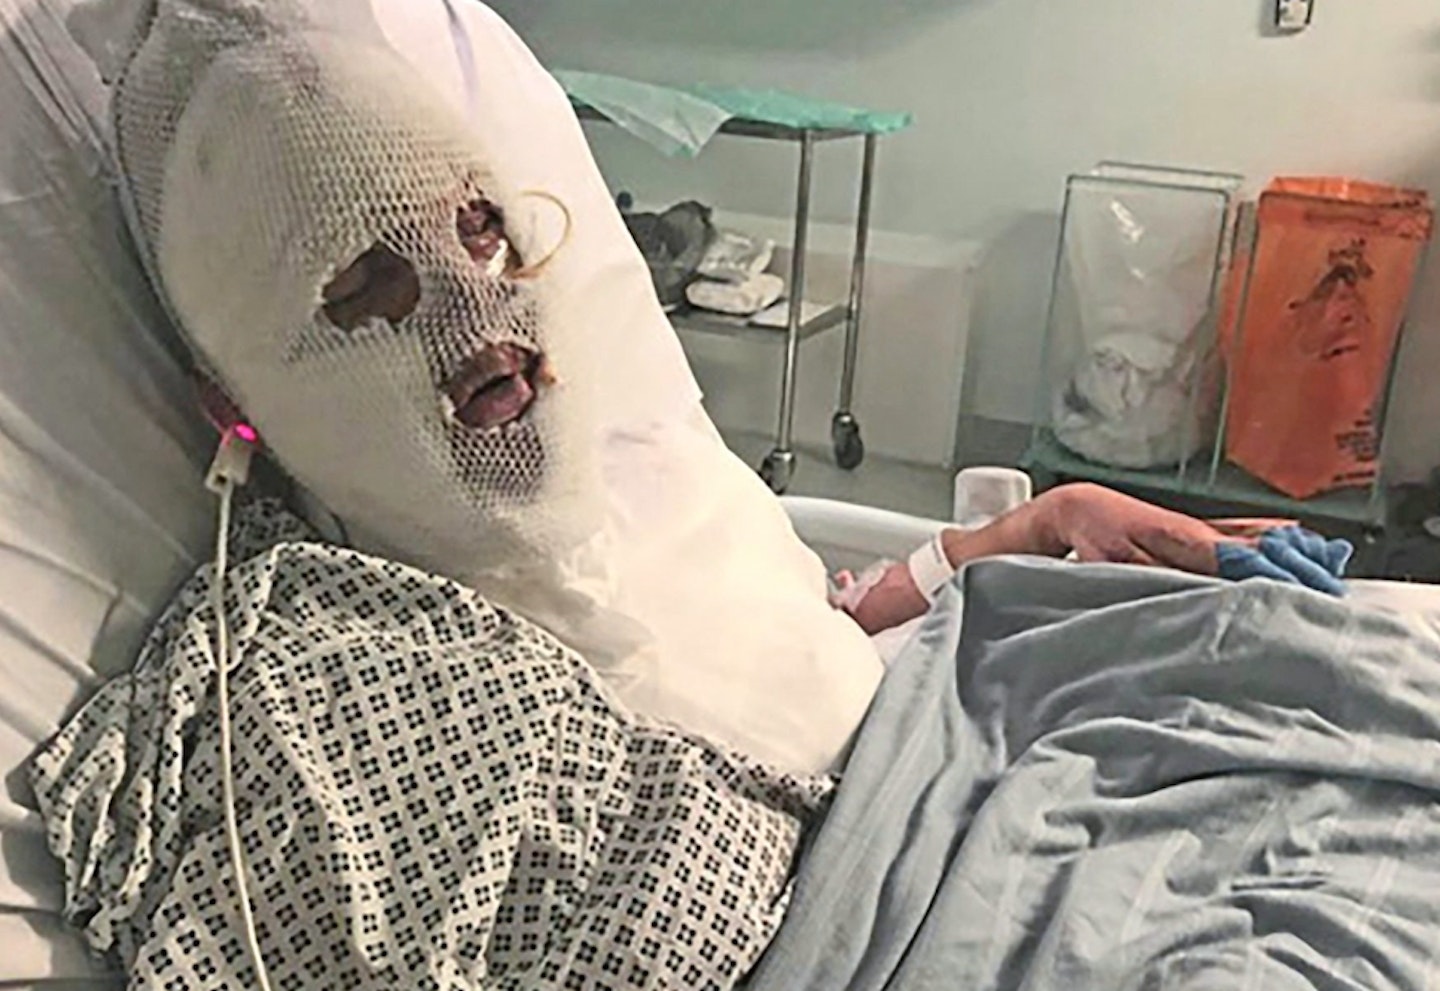 Burns survivor April Charlesworth in hospital